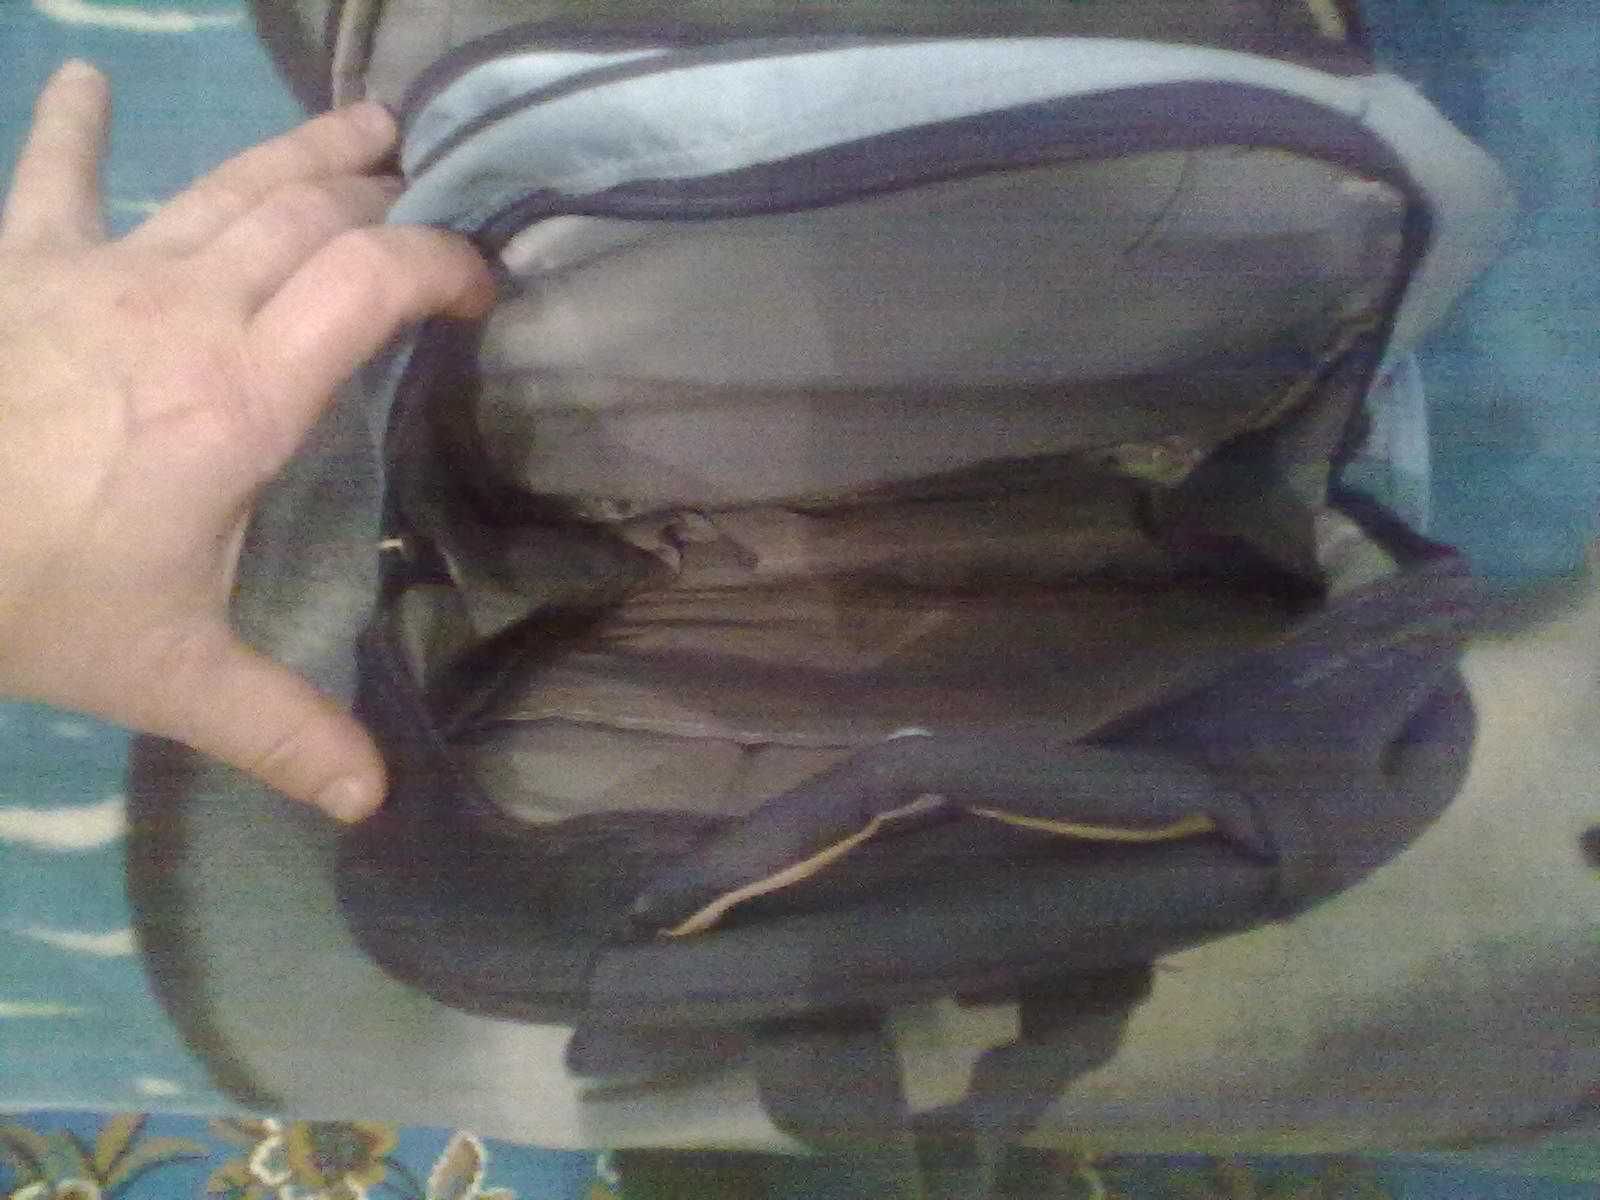 Рюкзак "Людина-павук" для школяра.